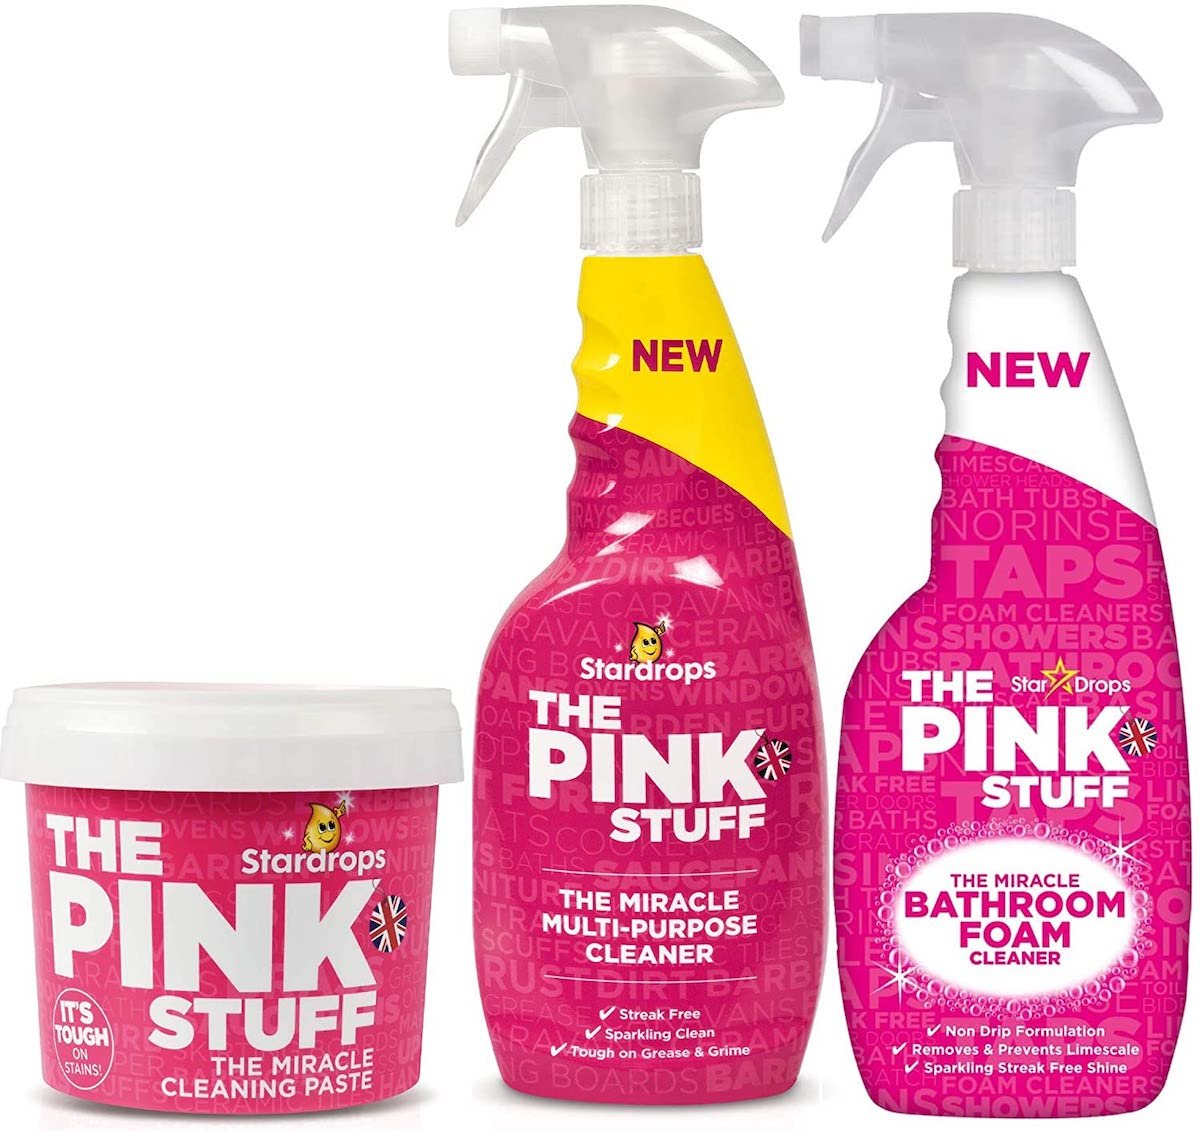 https://d.newsweek.com/en/full/1843987/best-cleaning-products-pink-stuff.jpg?w=1200&f=f99280052281c44ed69c059cb78eba55